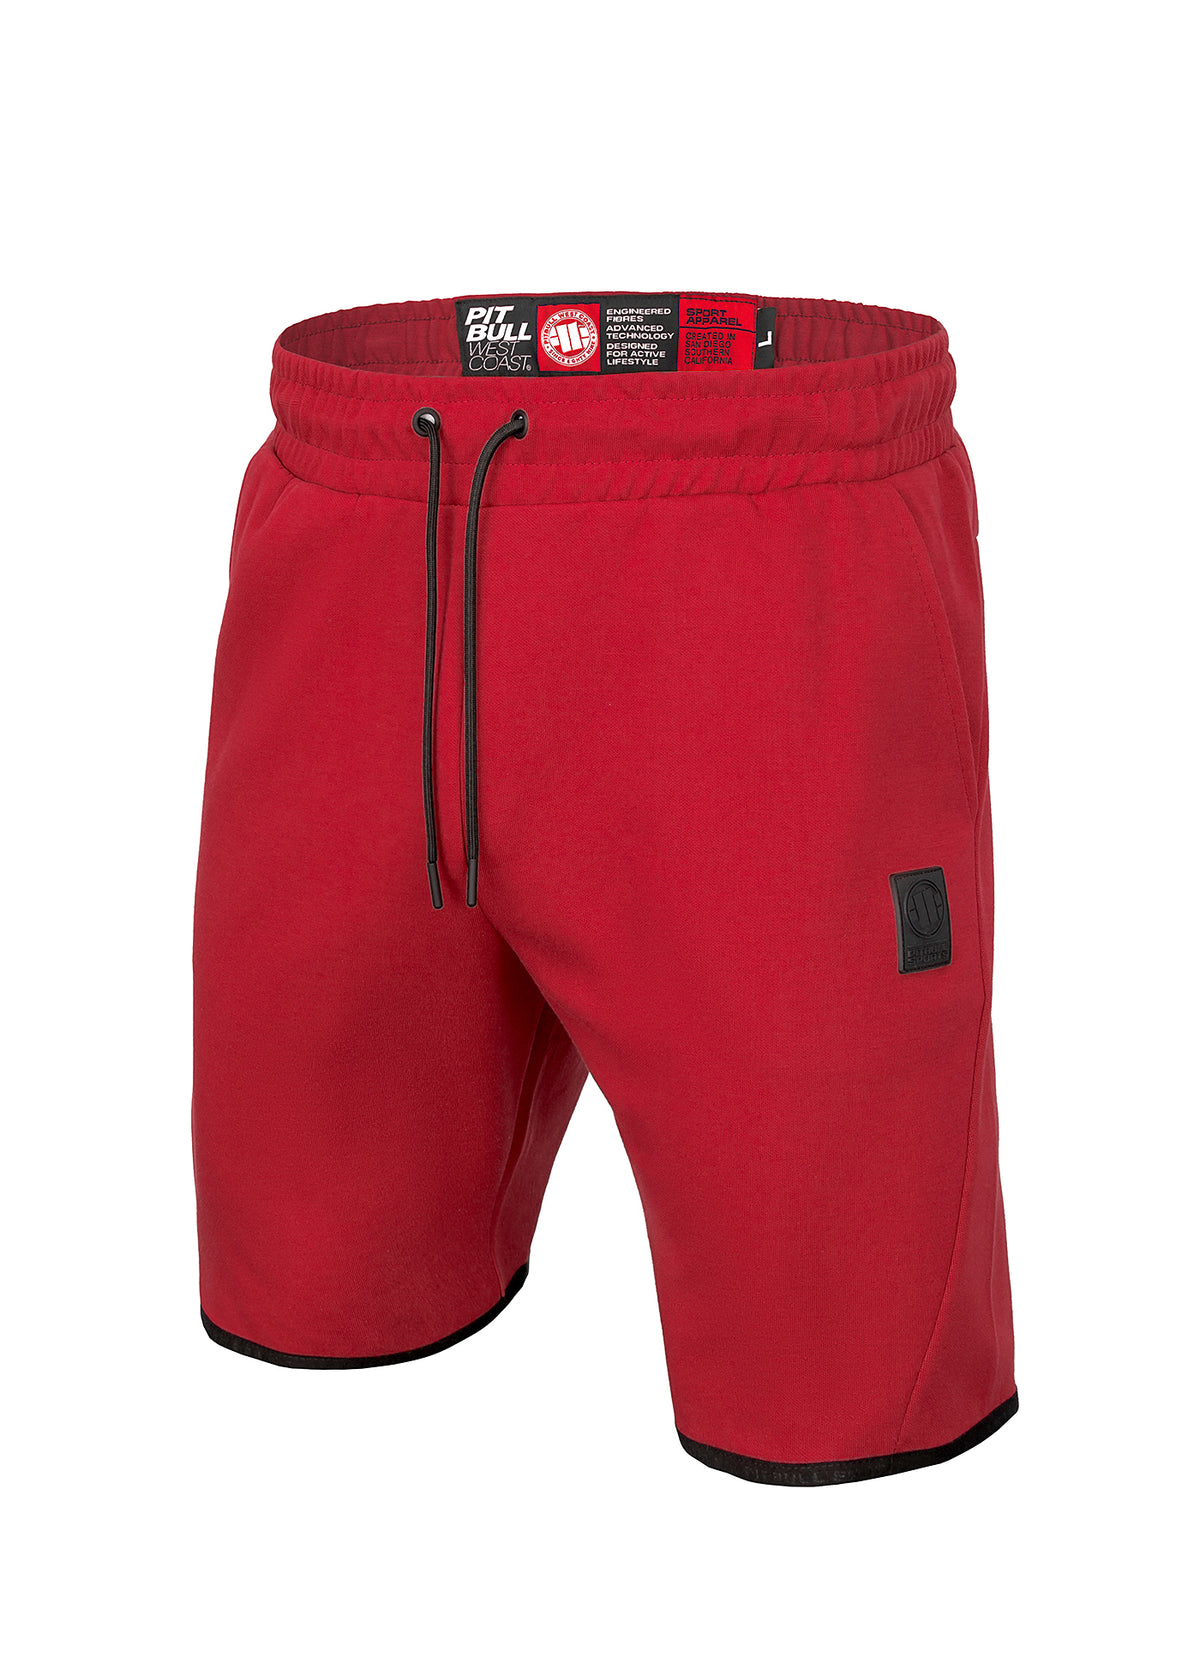 ALCORN Red Shorts.